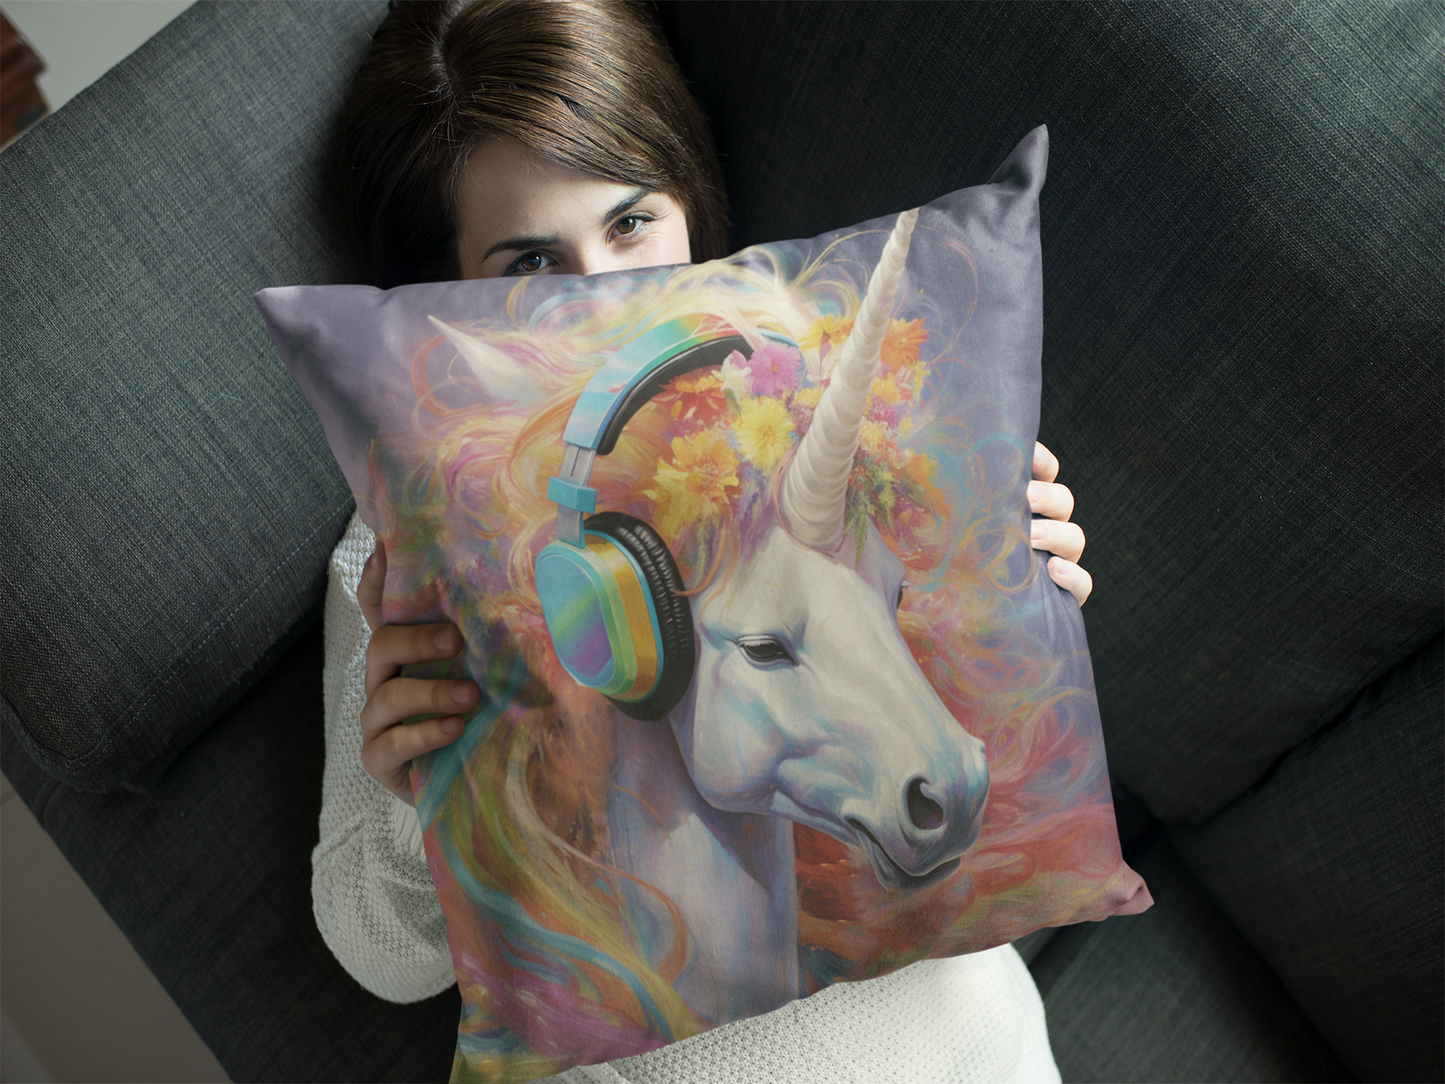 Unicorn Square Pillow